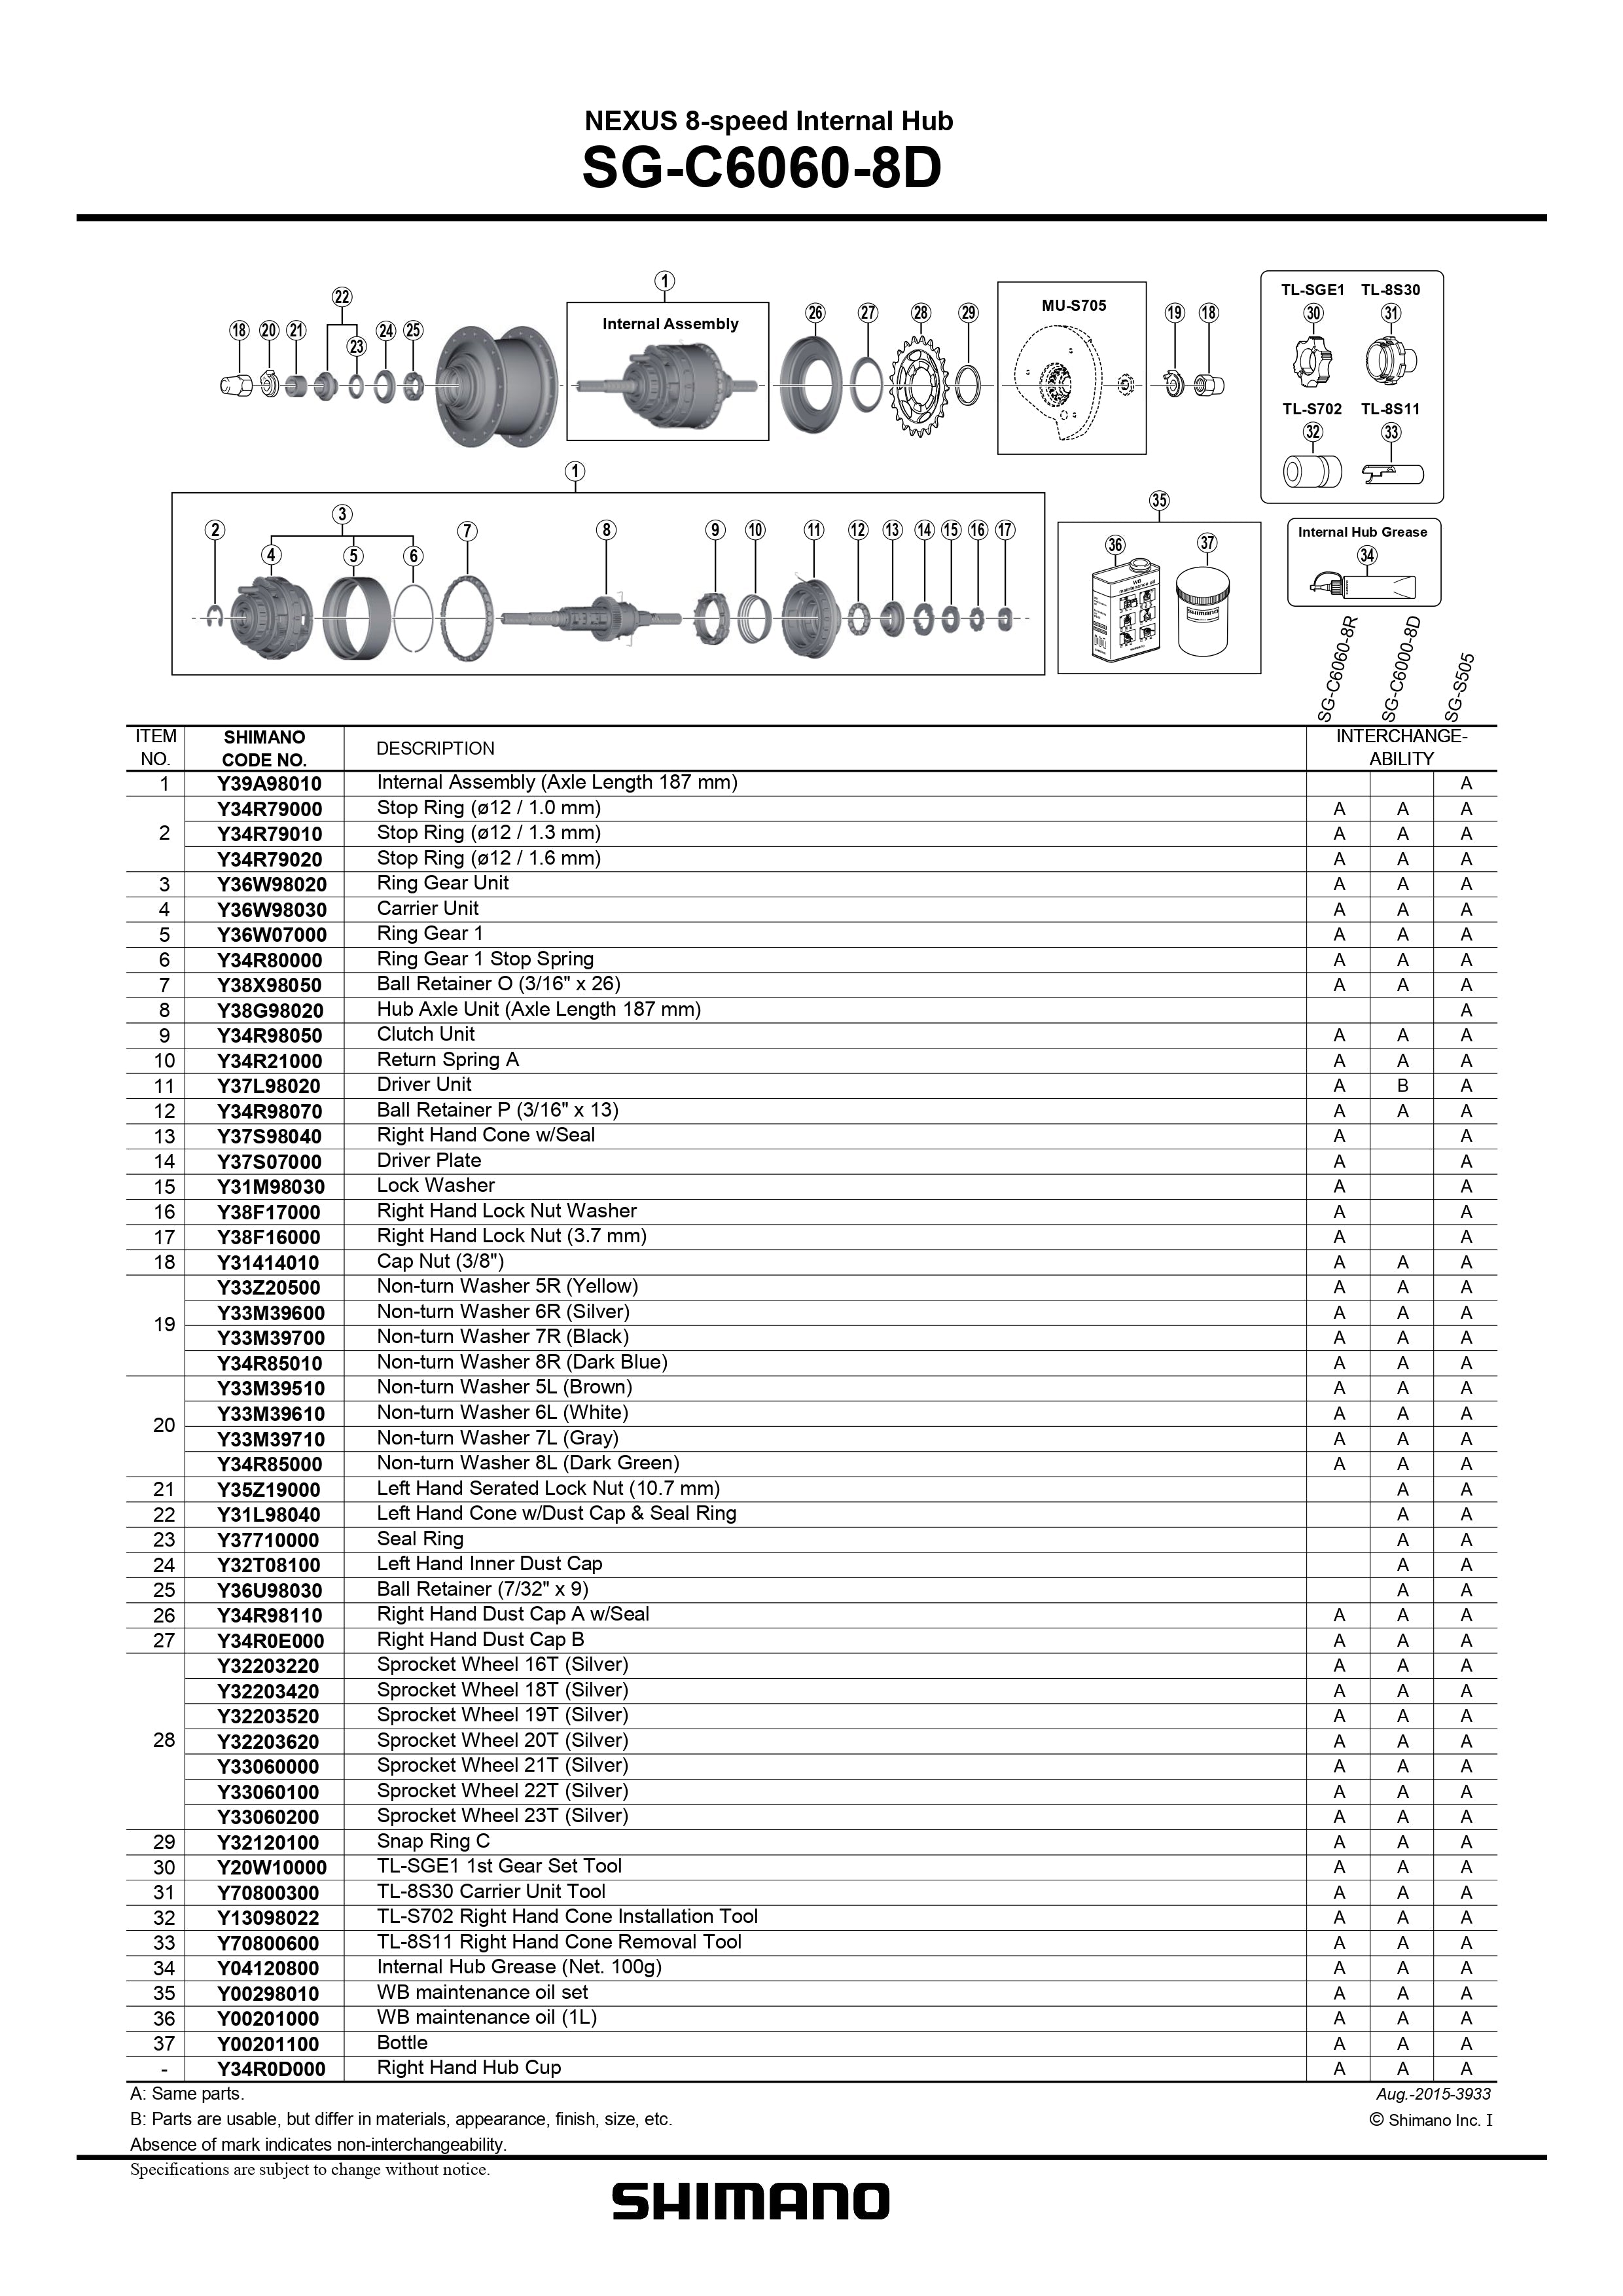 SHIMANO Nexus SG-C6060-8D Internal Hub 8-Speed Internal Assembly 